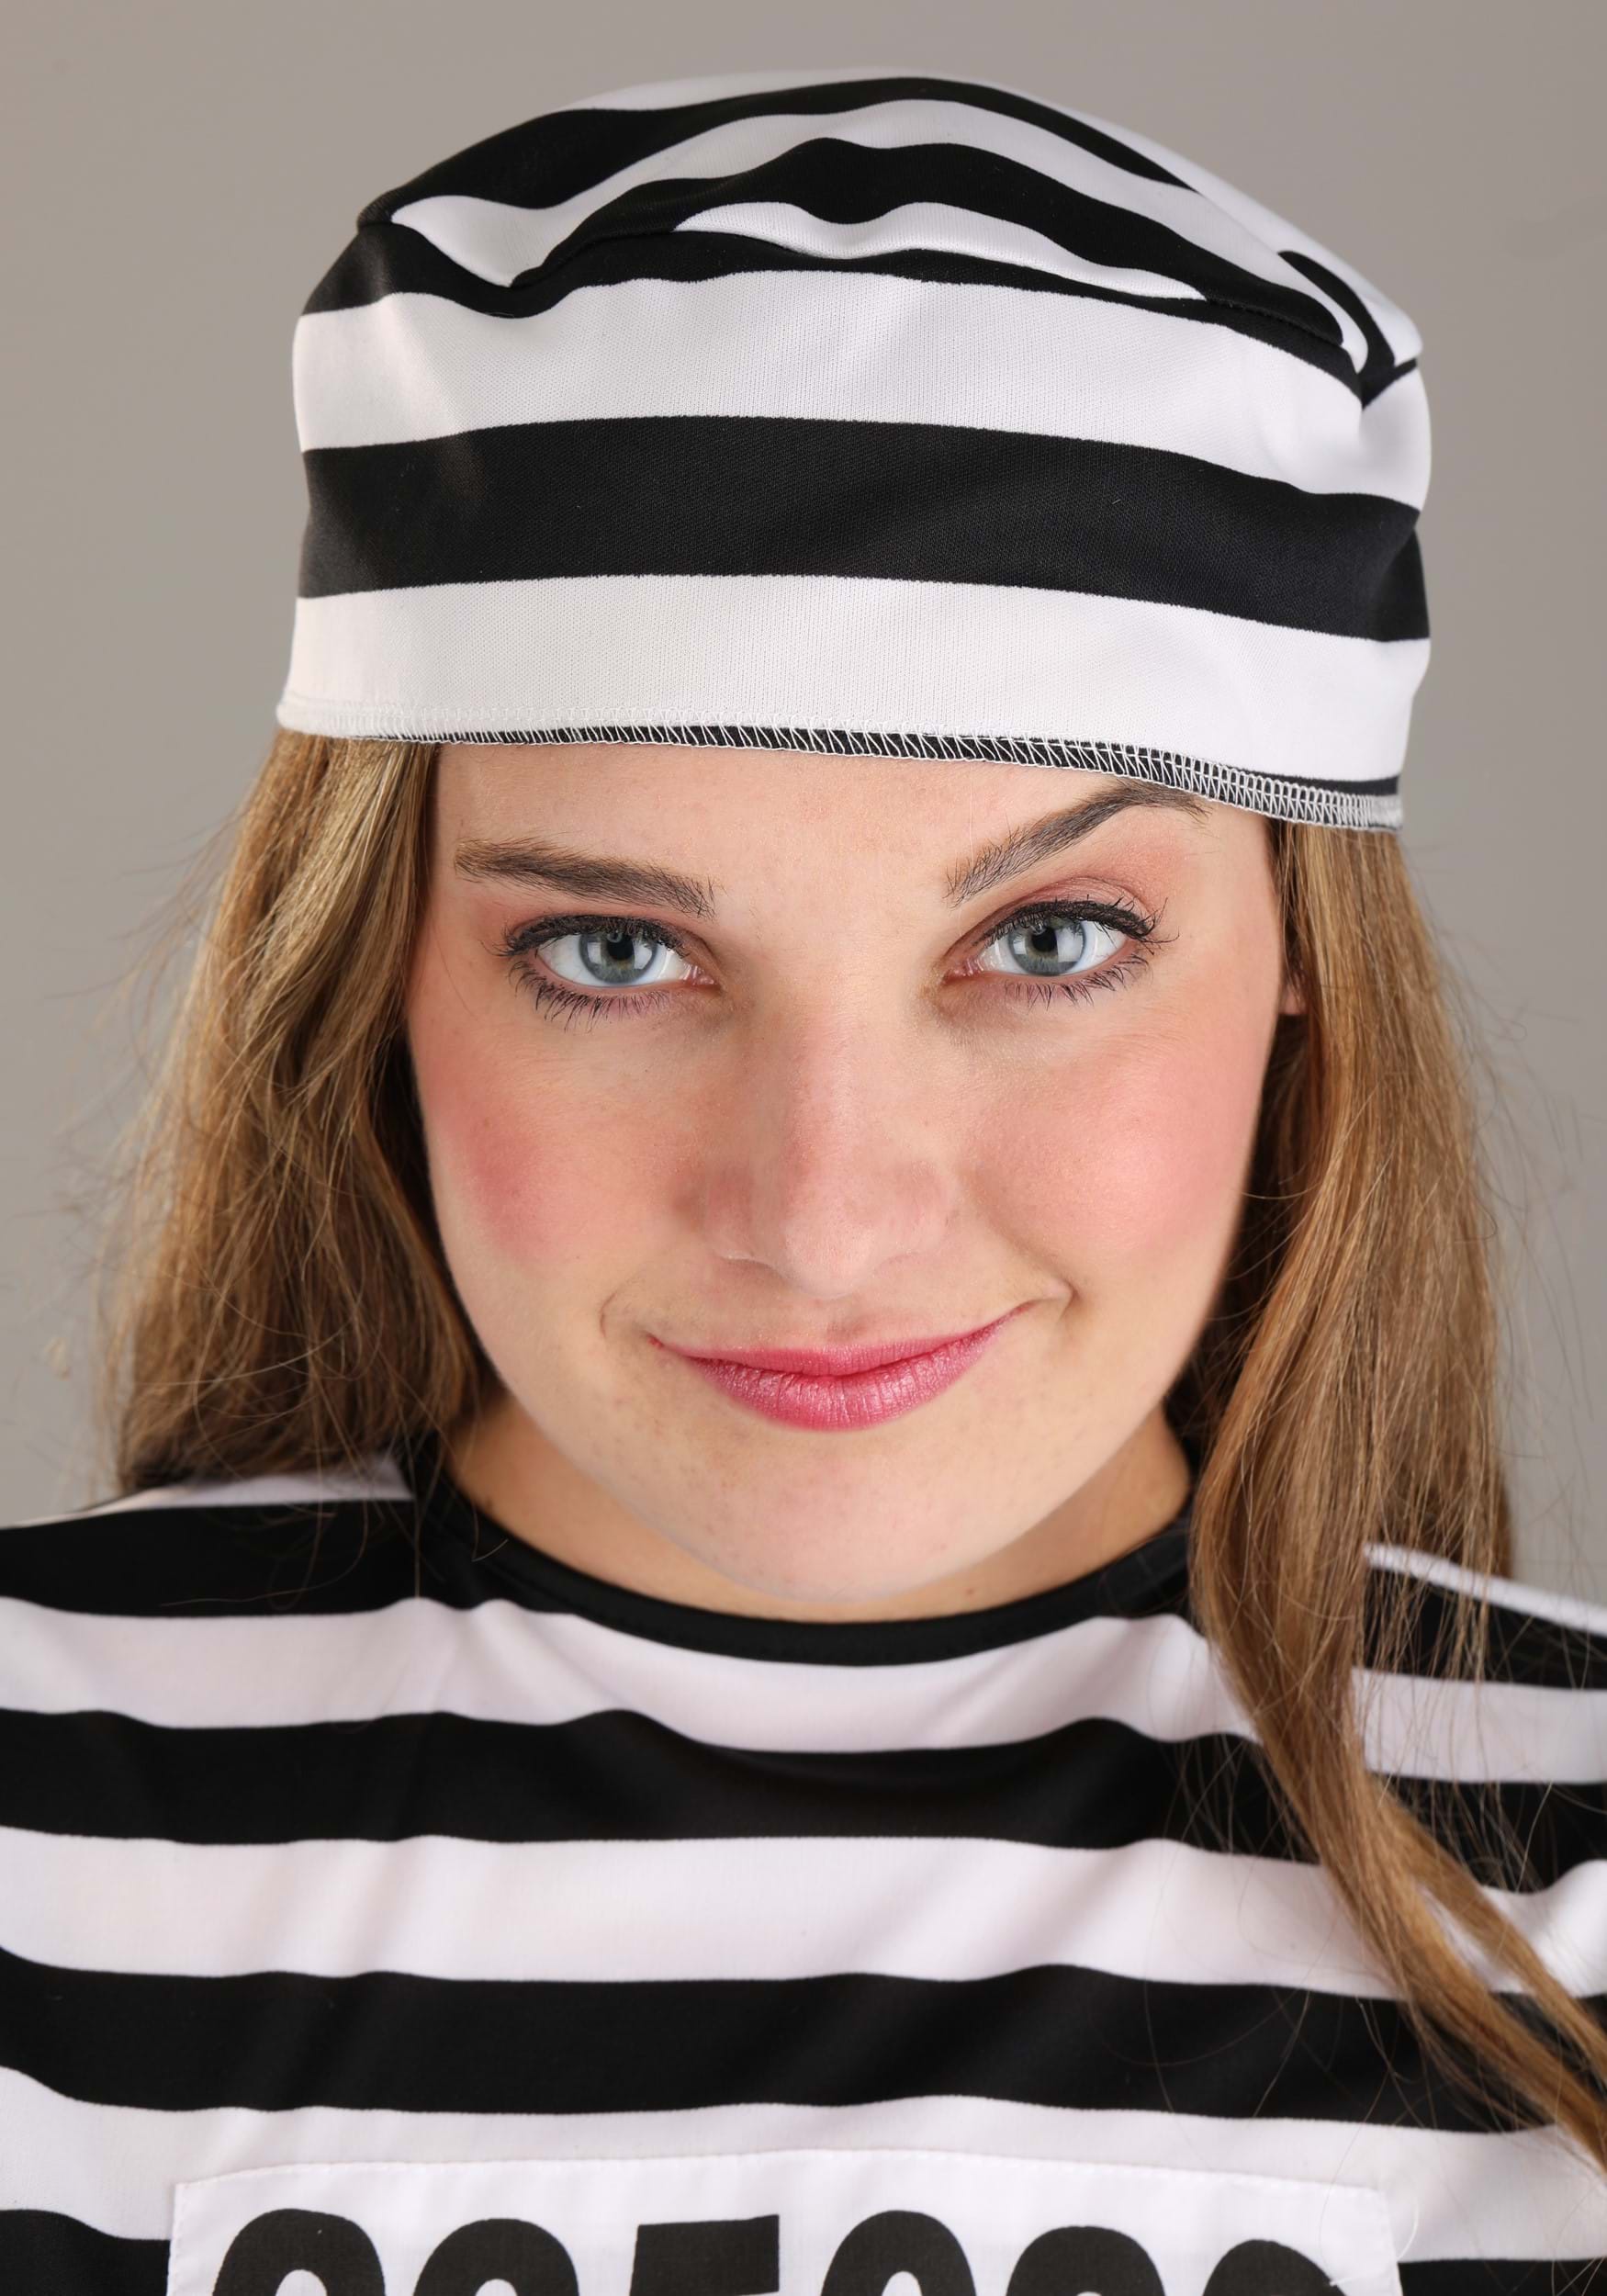 Women's Striped Prisoner Costume , Jailbird Women's Costume